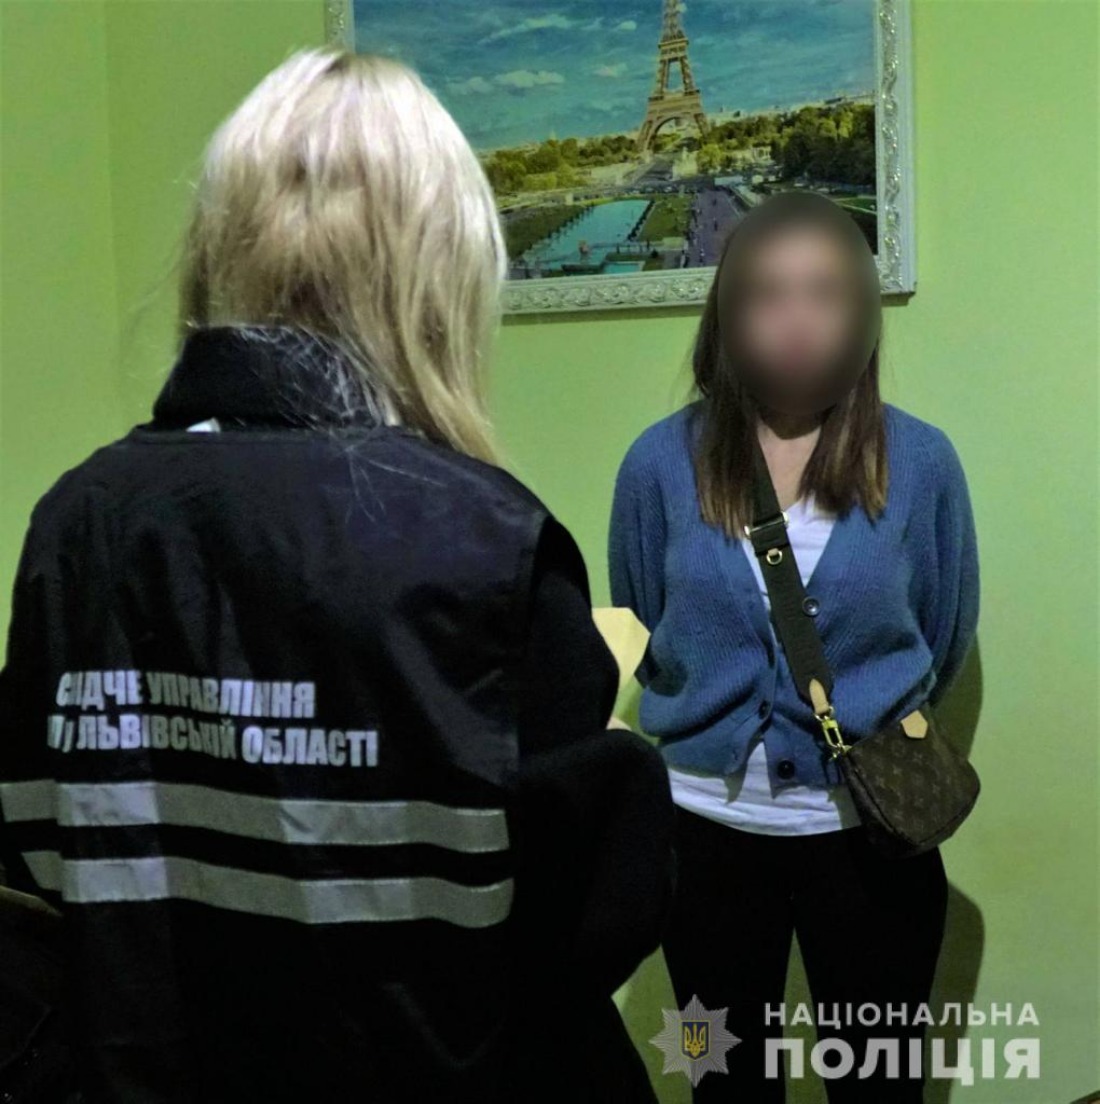 Во Львове банда похитила девушку и требовала выкуп